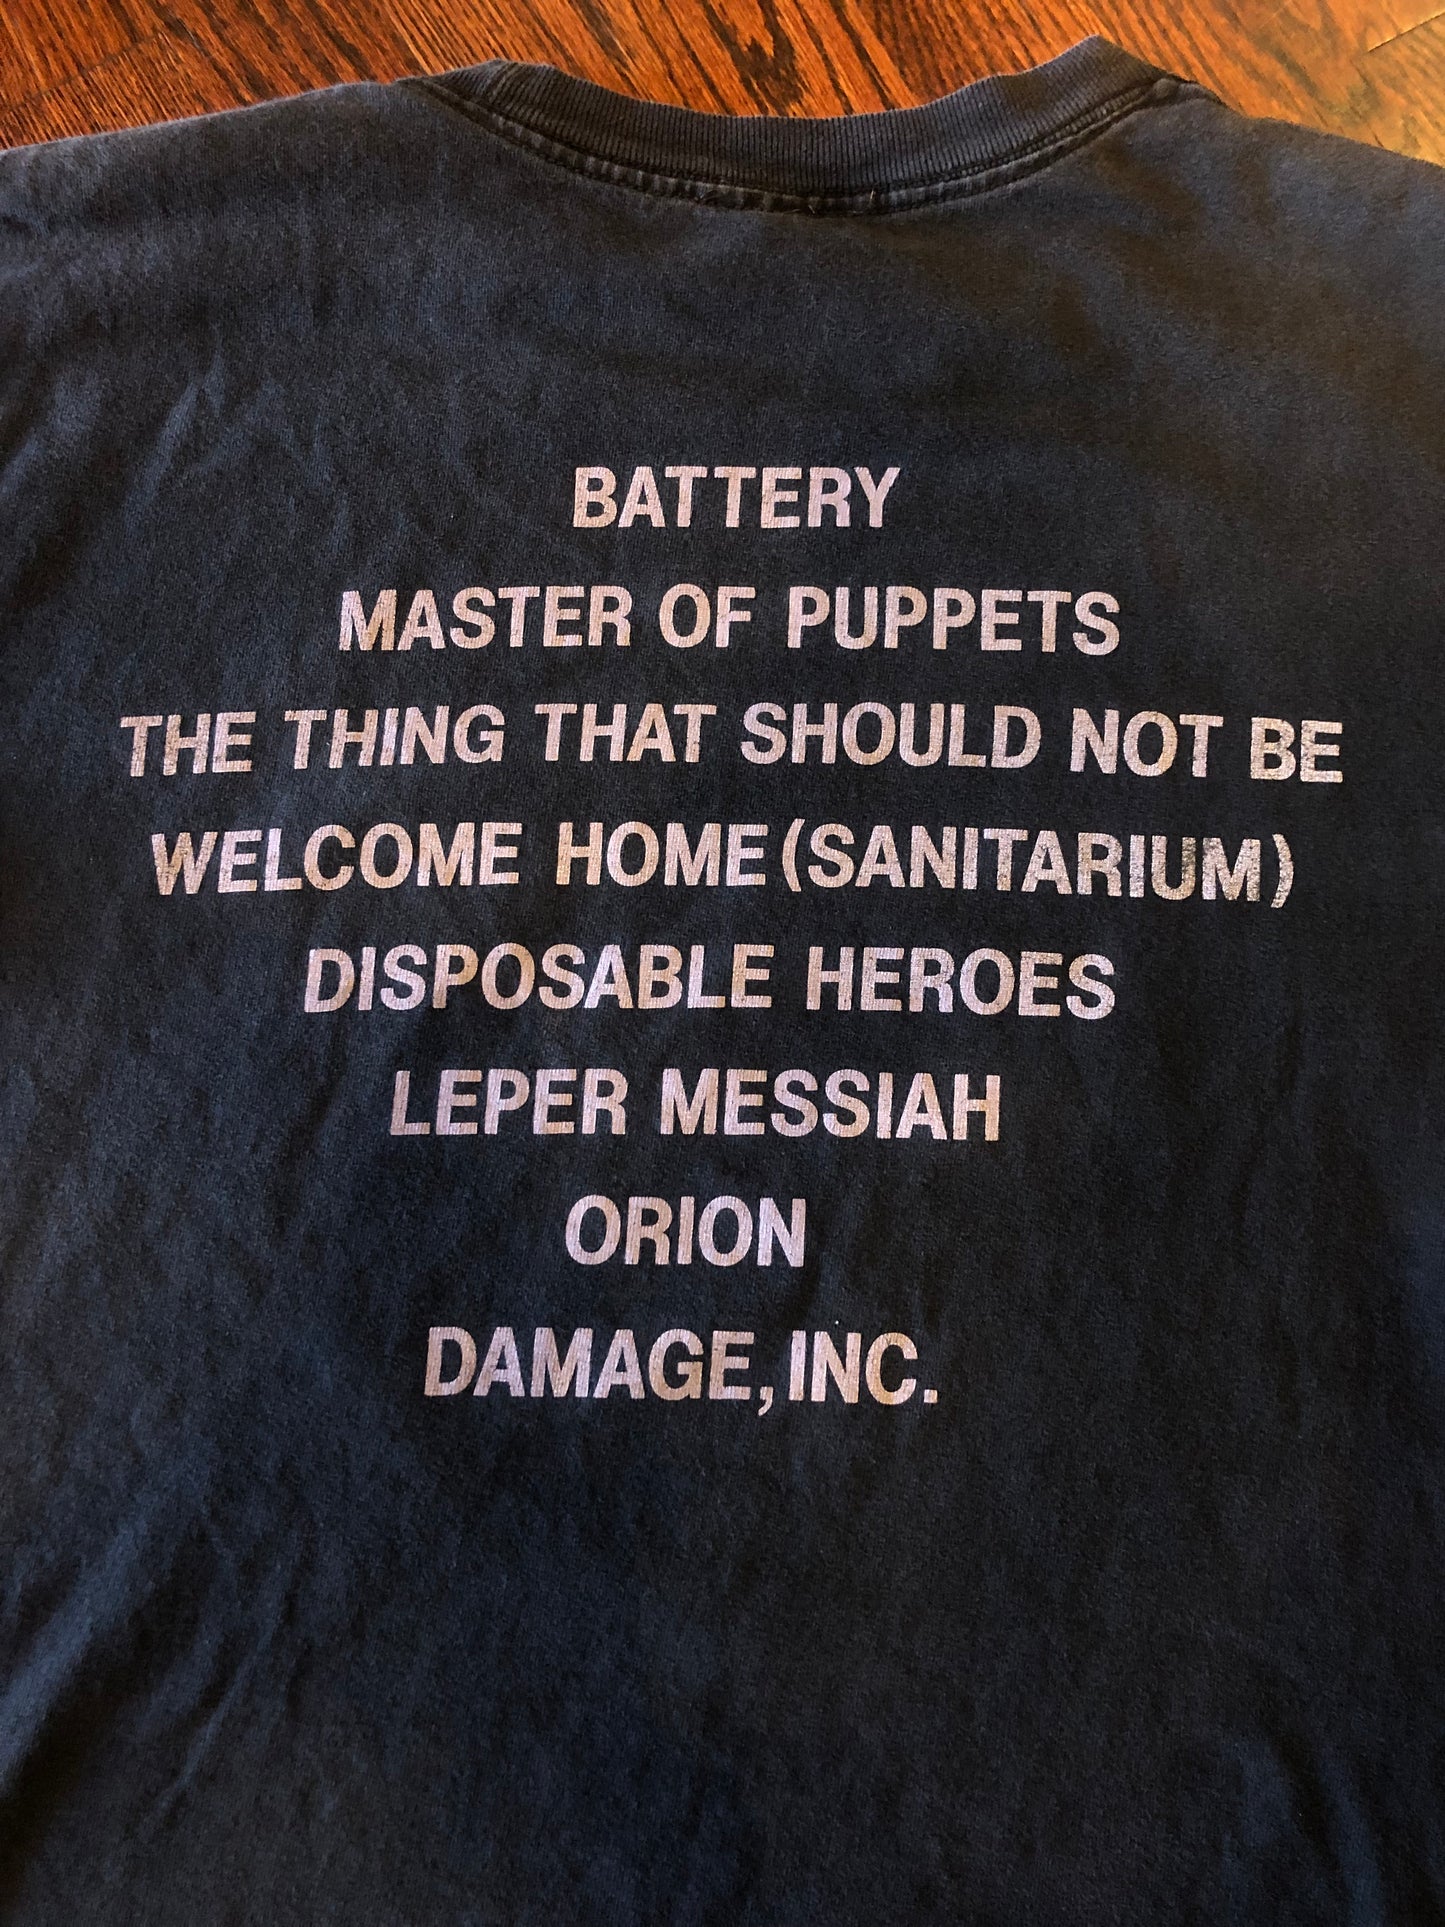 Vintage Metallica “Master Of Puppets” Album T-Shirt